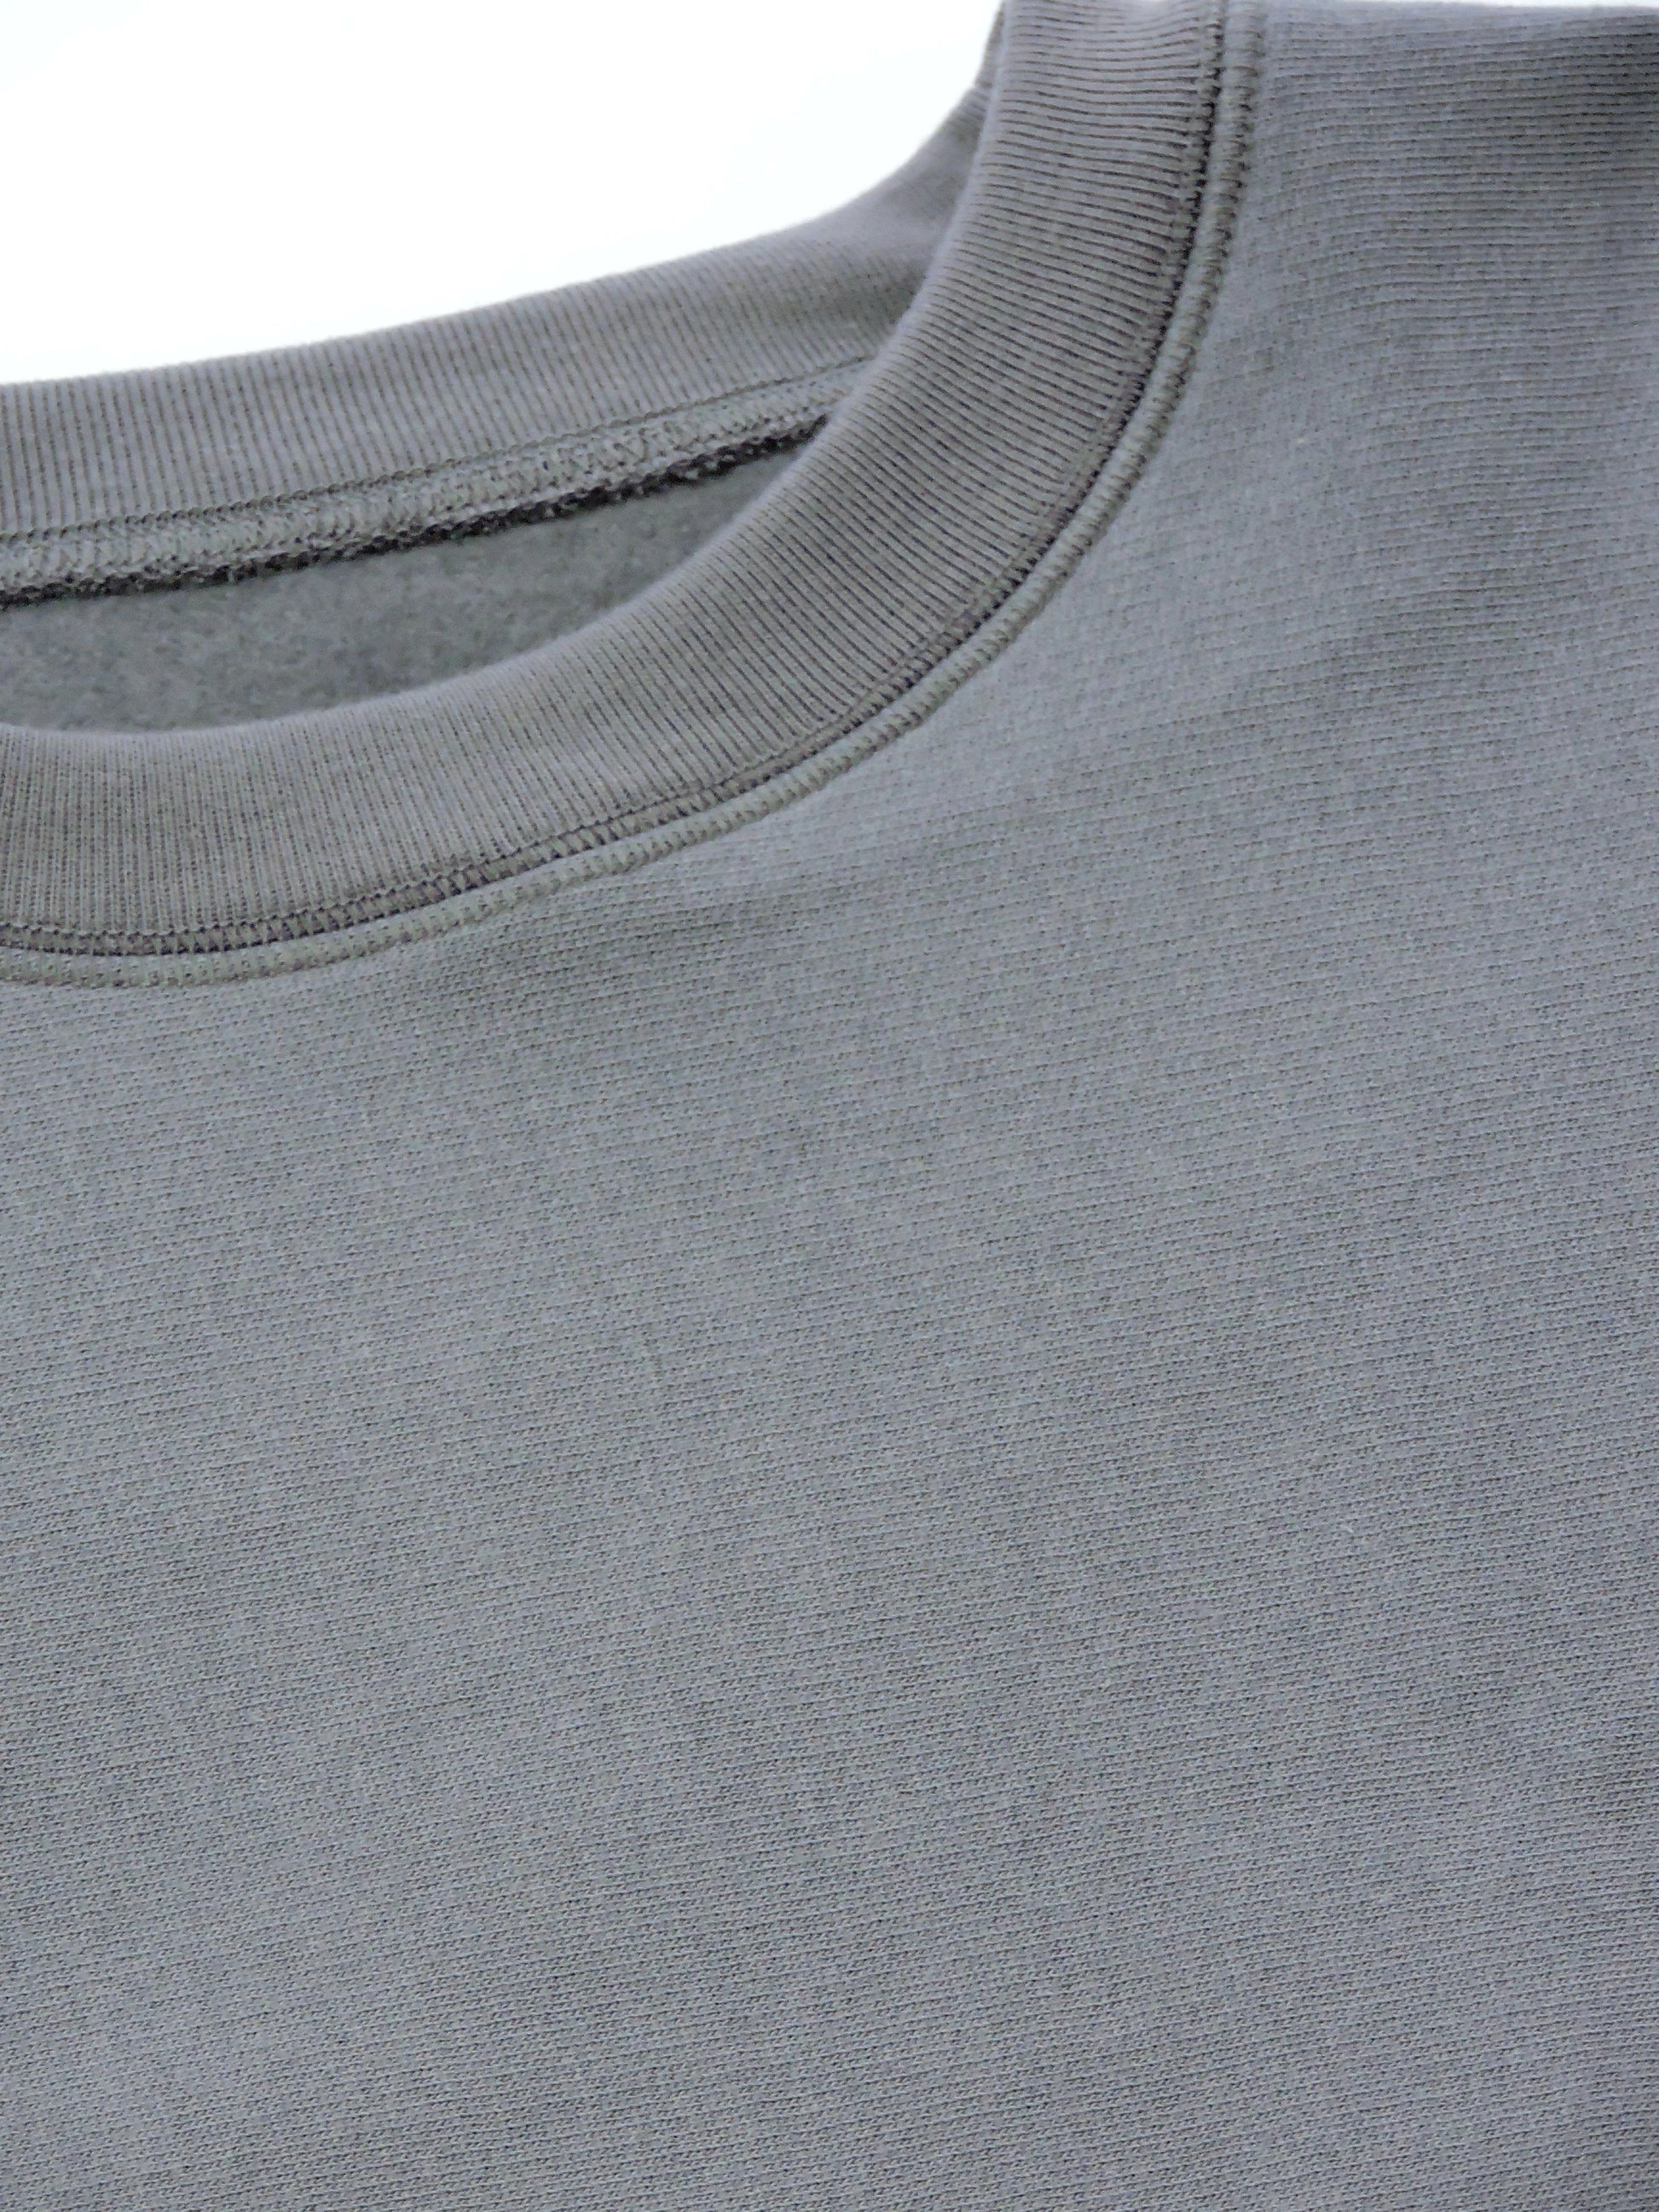 Close up of neckline stitching and premium cotton material